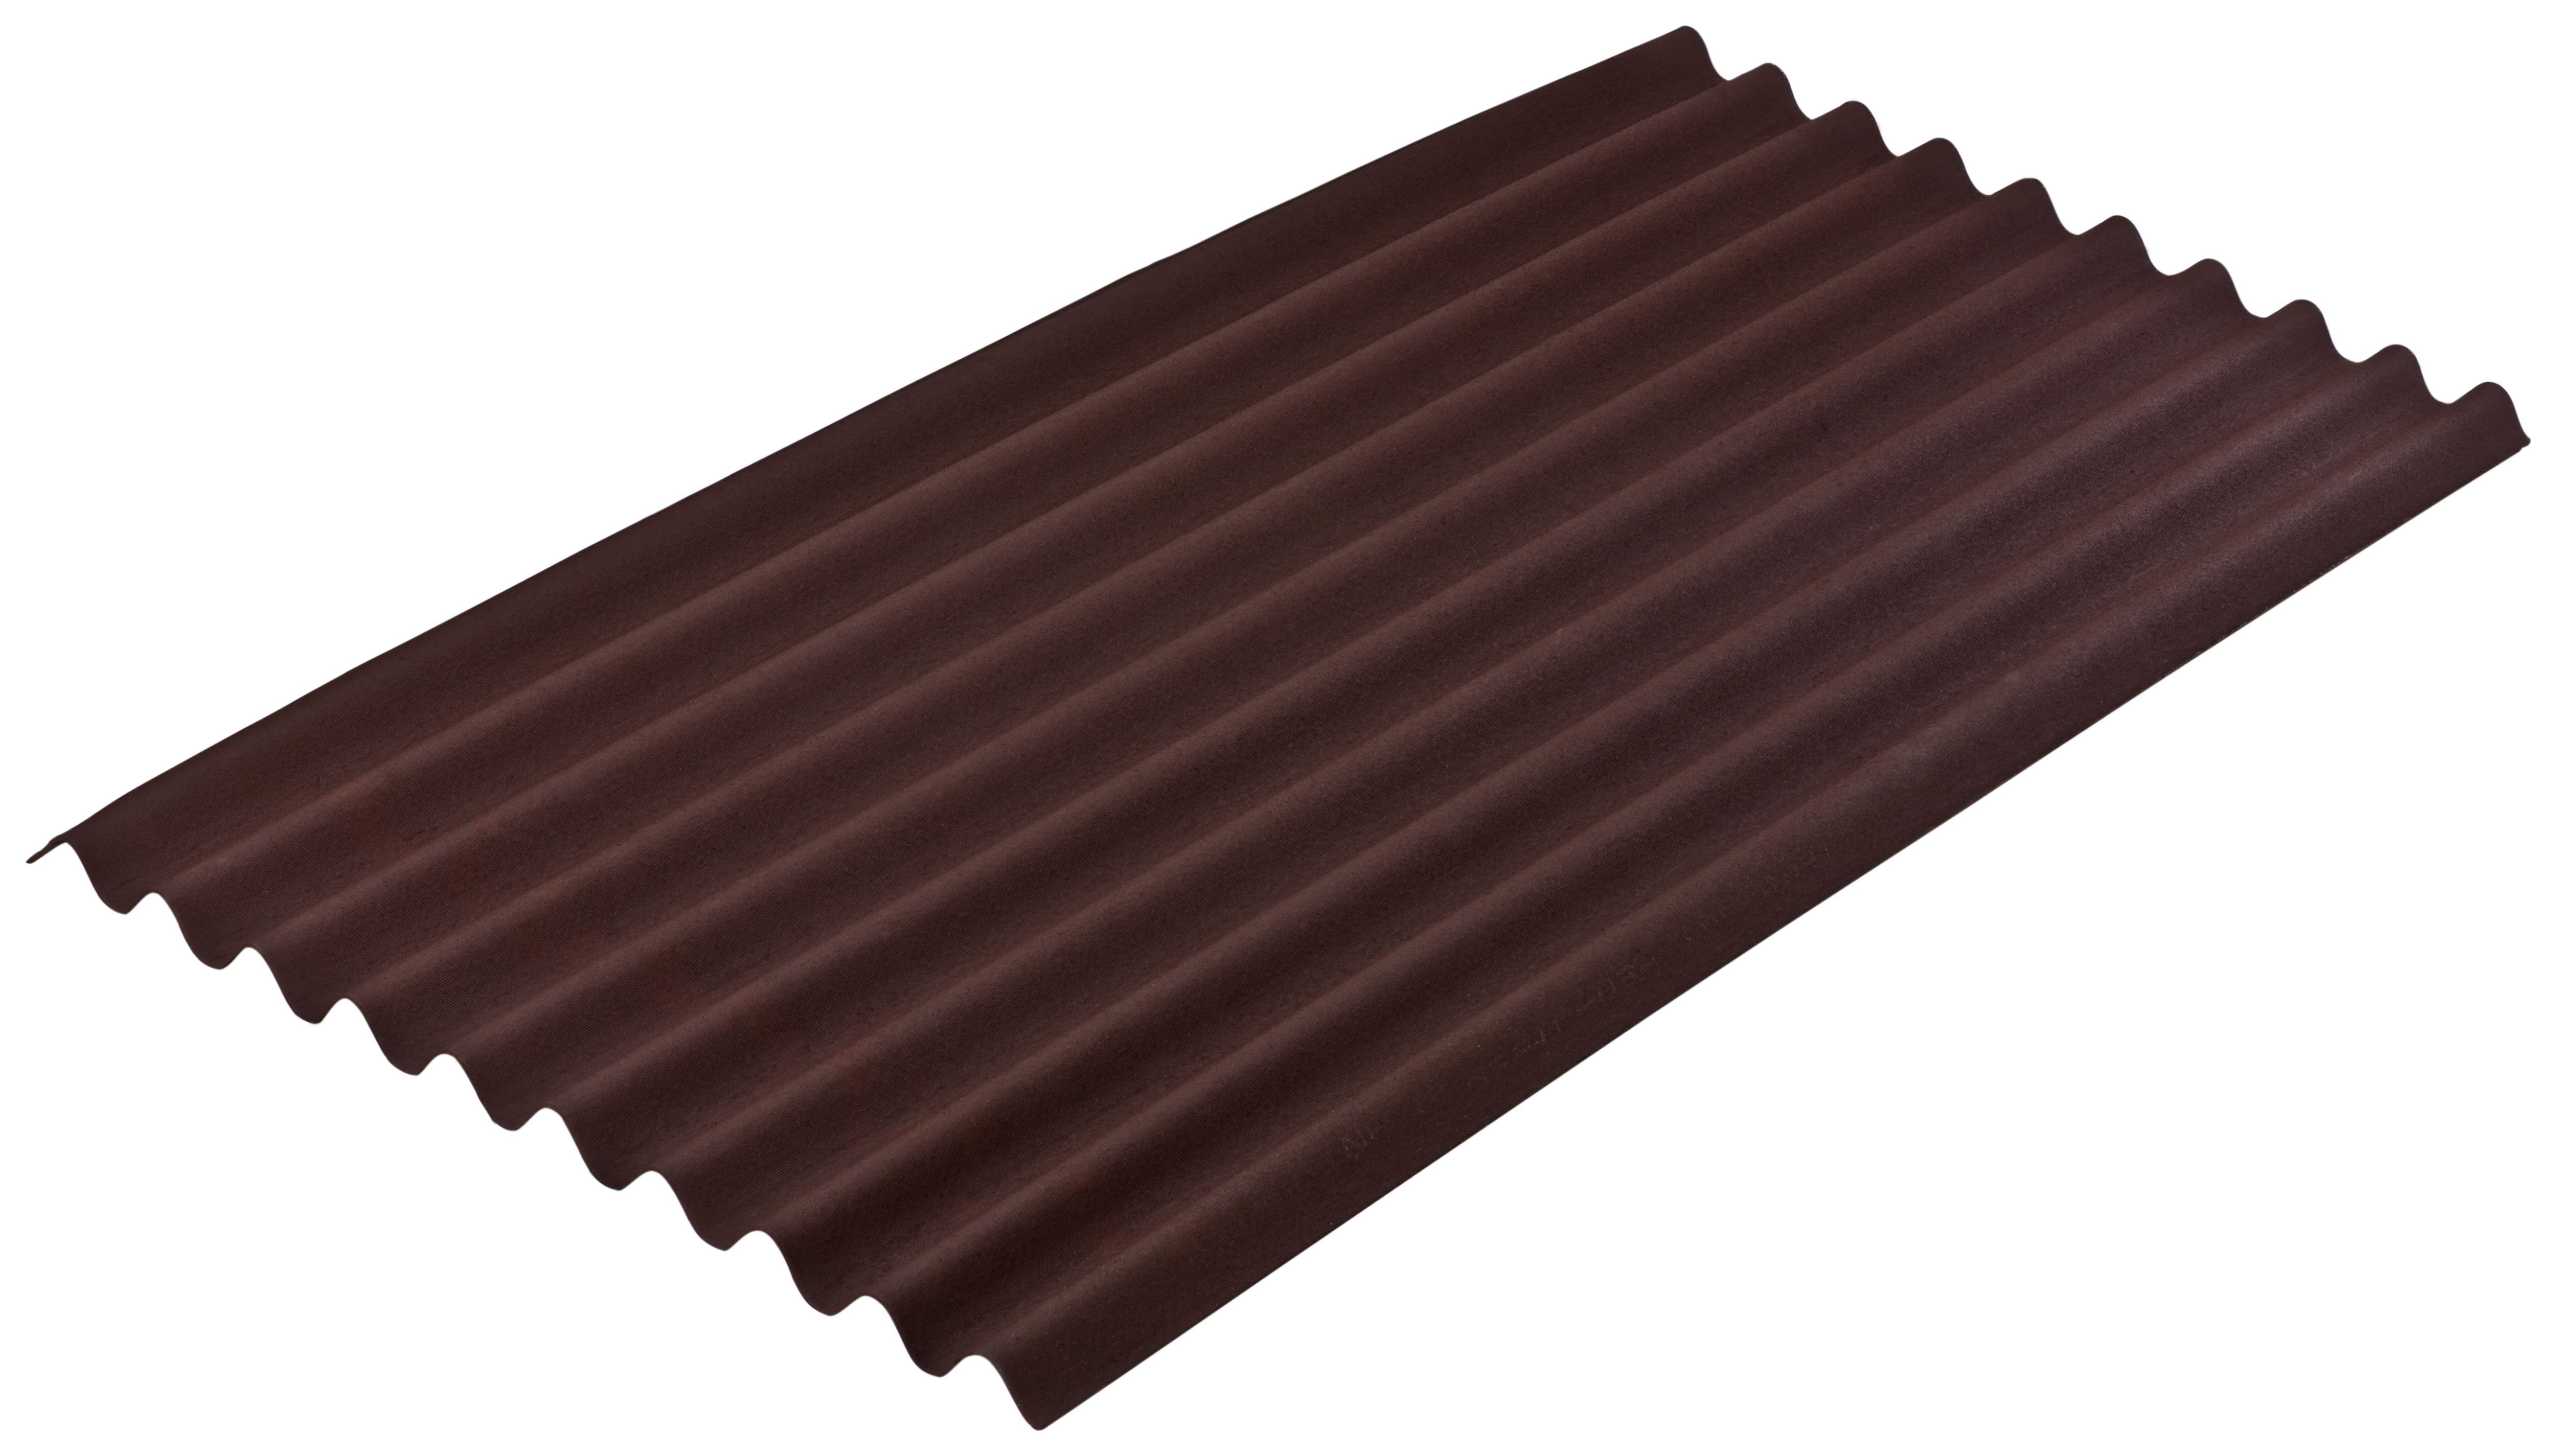 Onduline Classic Brown Bitumen Corrugated Roof Sheet -